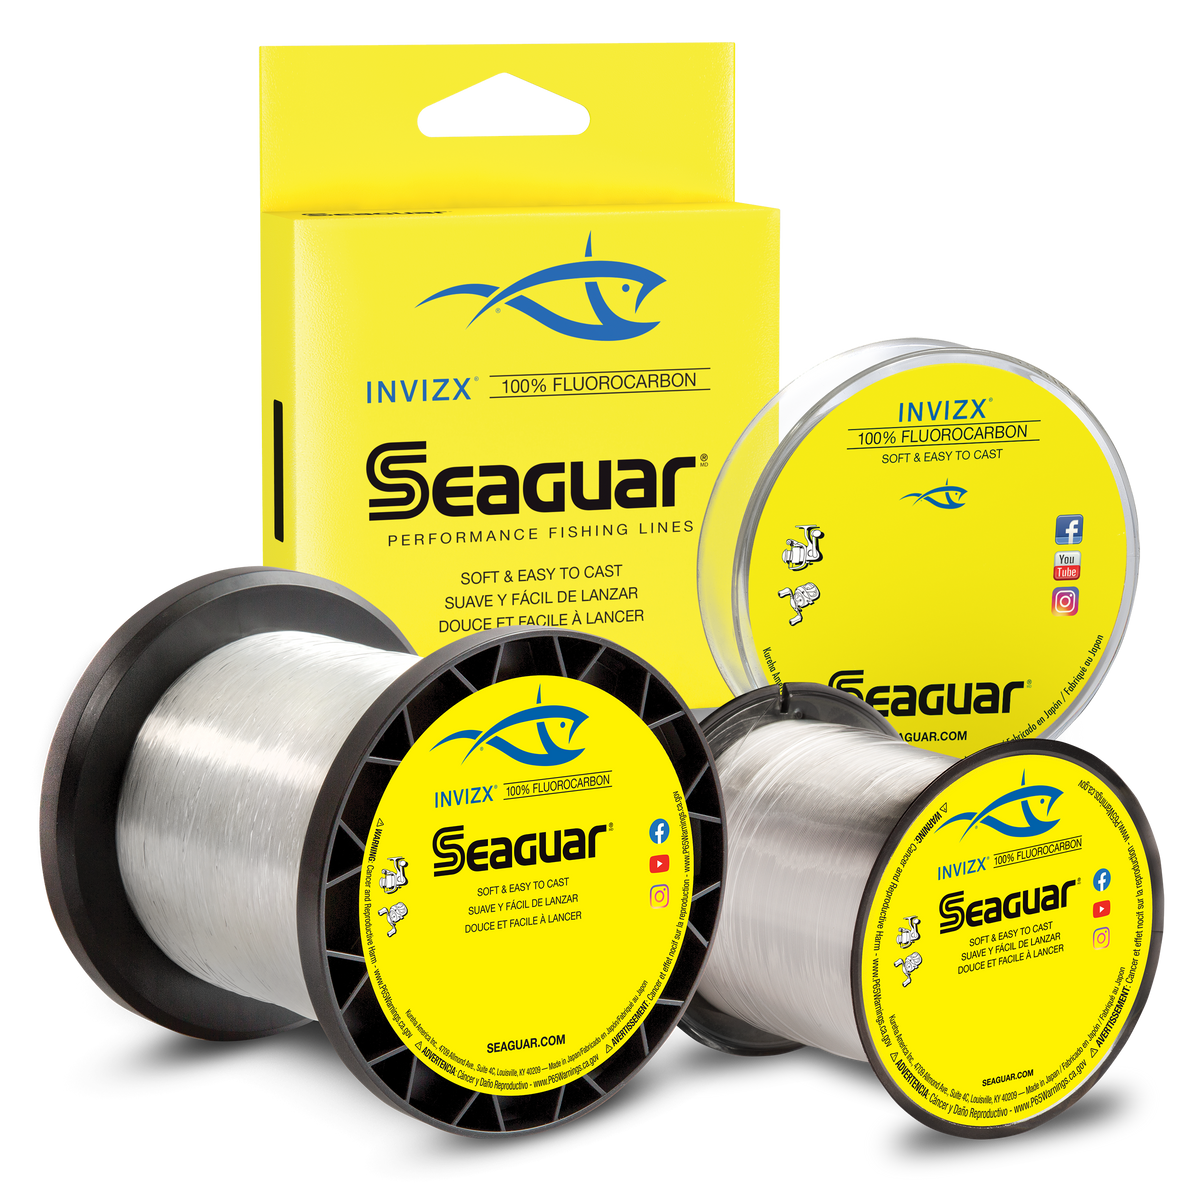 Seaguar Fishing Gear 